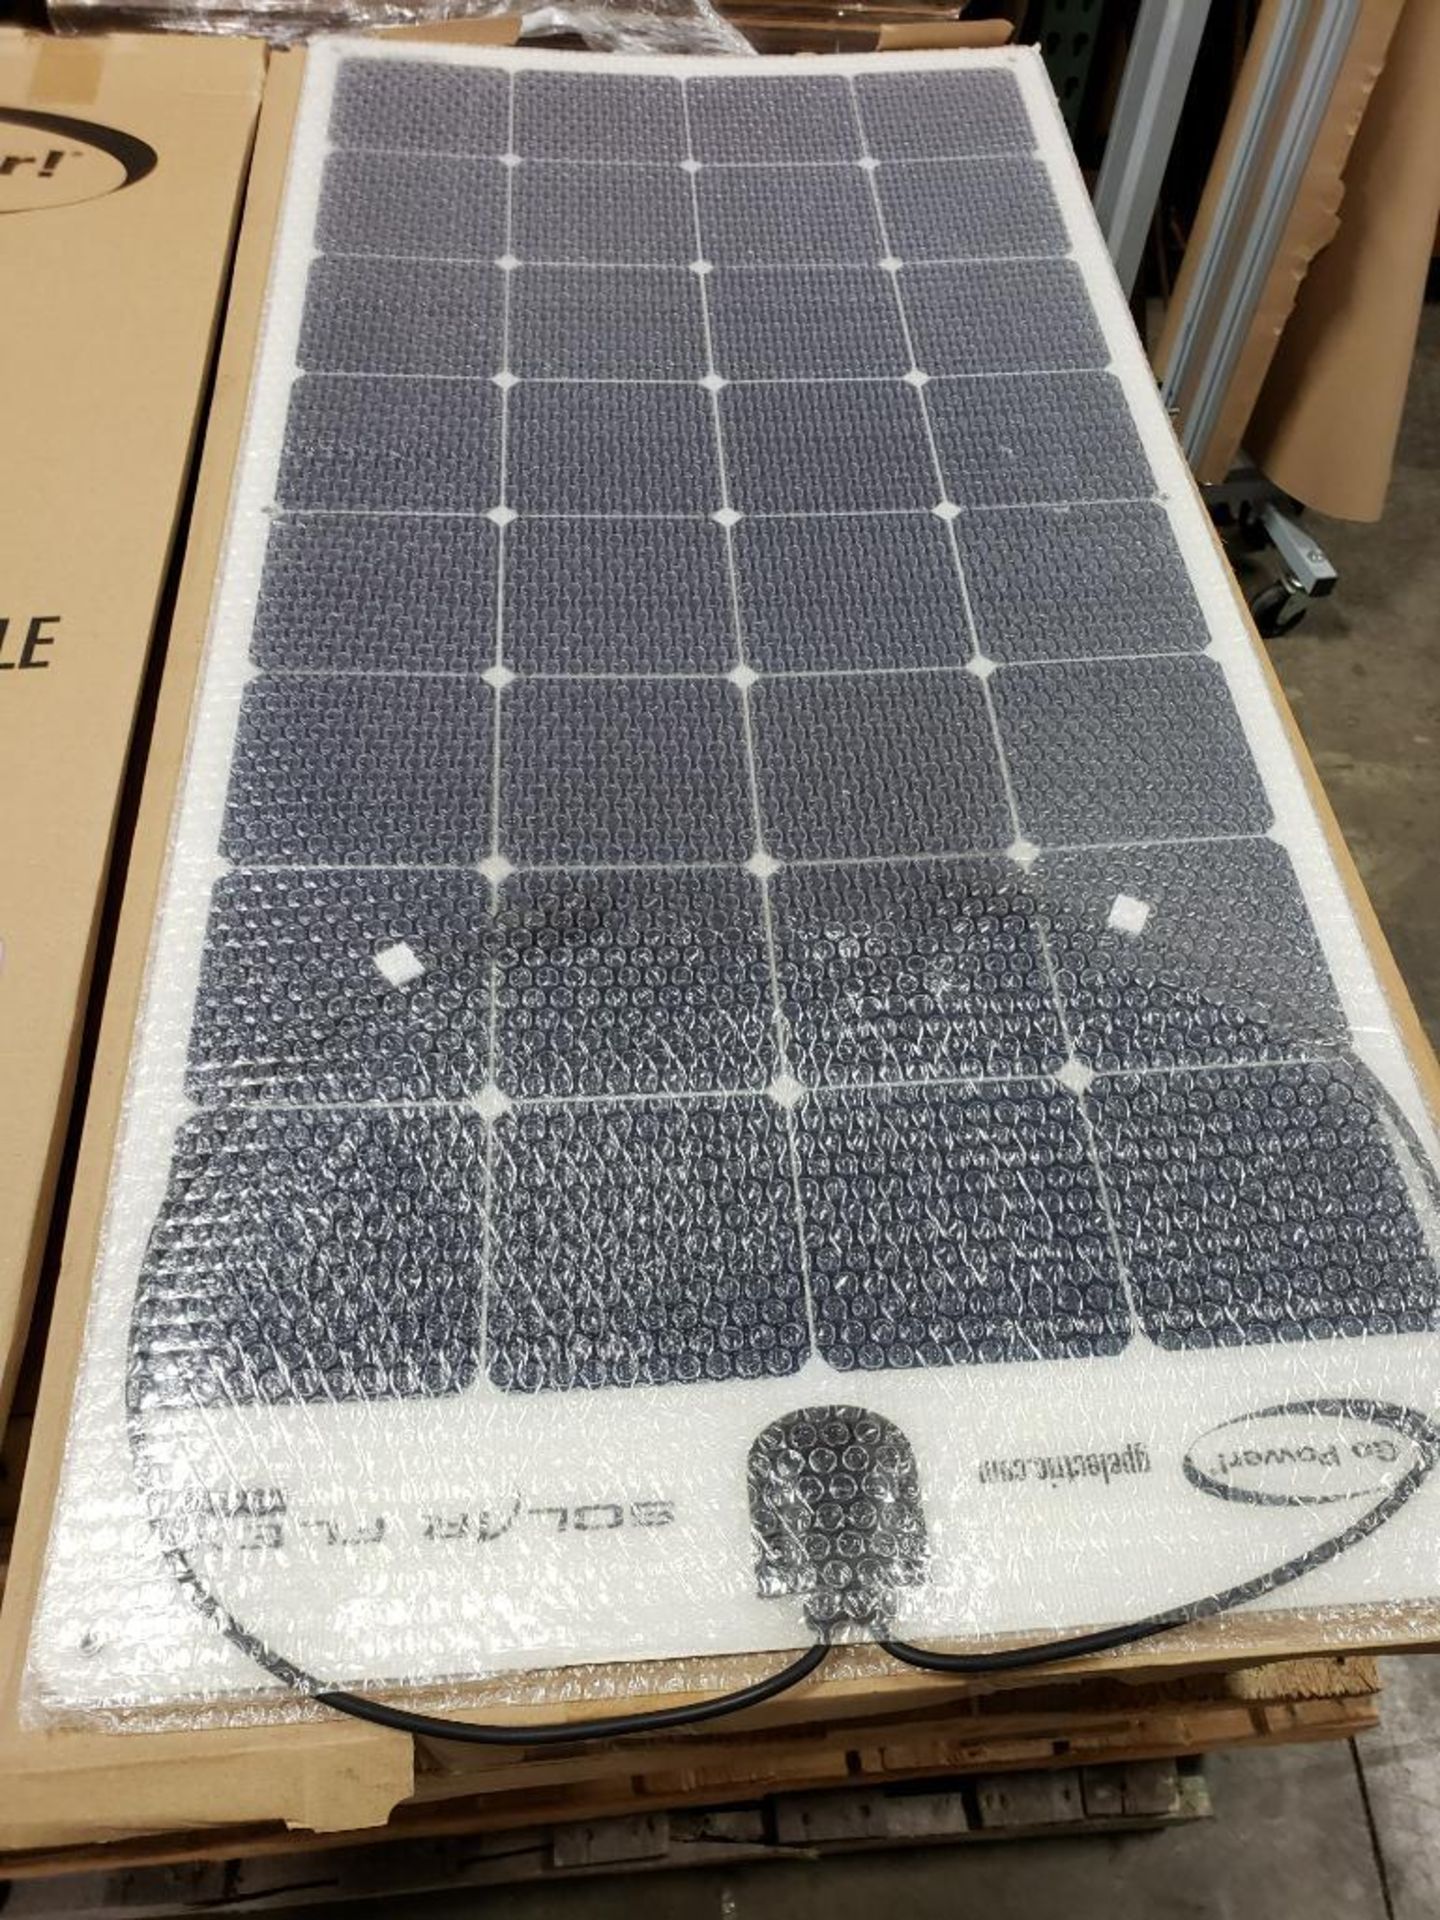 Qty 2 - Go Power 100w flexible solar panel. Model Flex-100. - Image 3 of 4